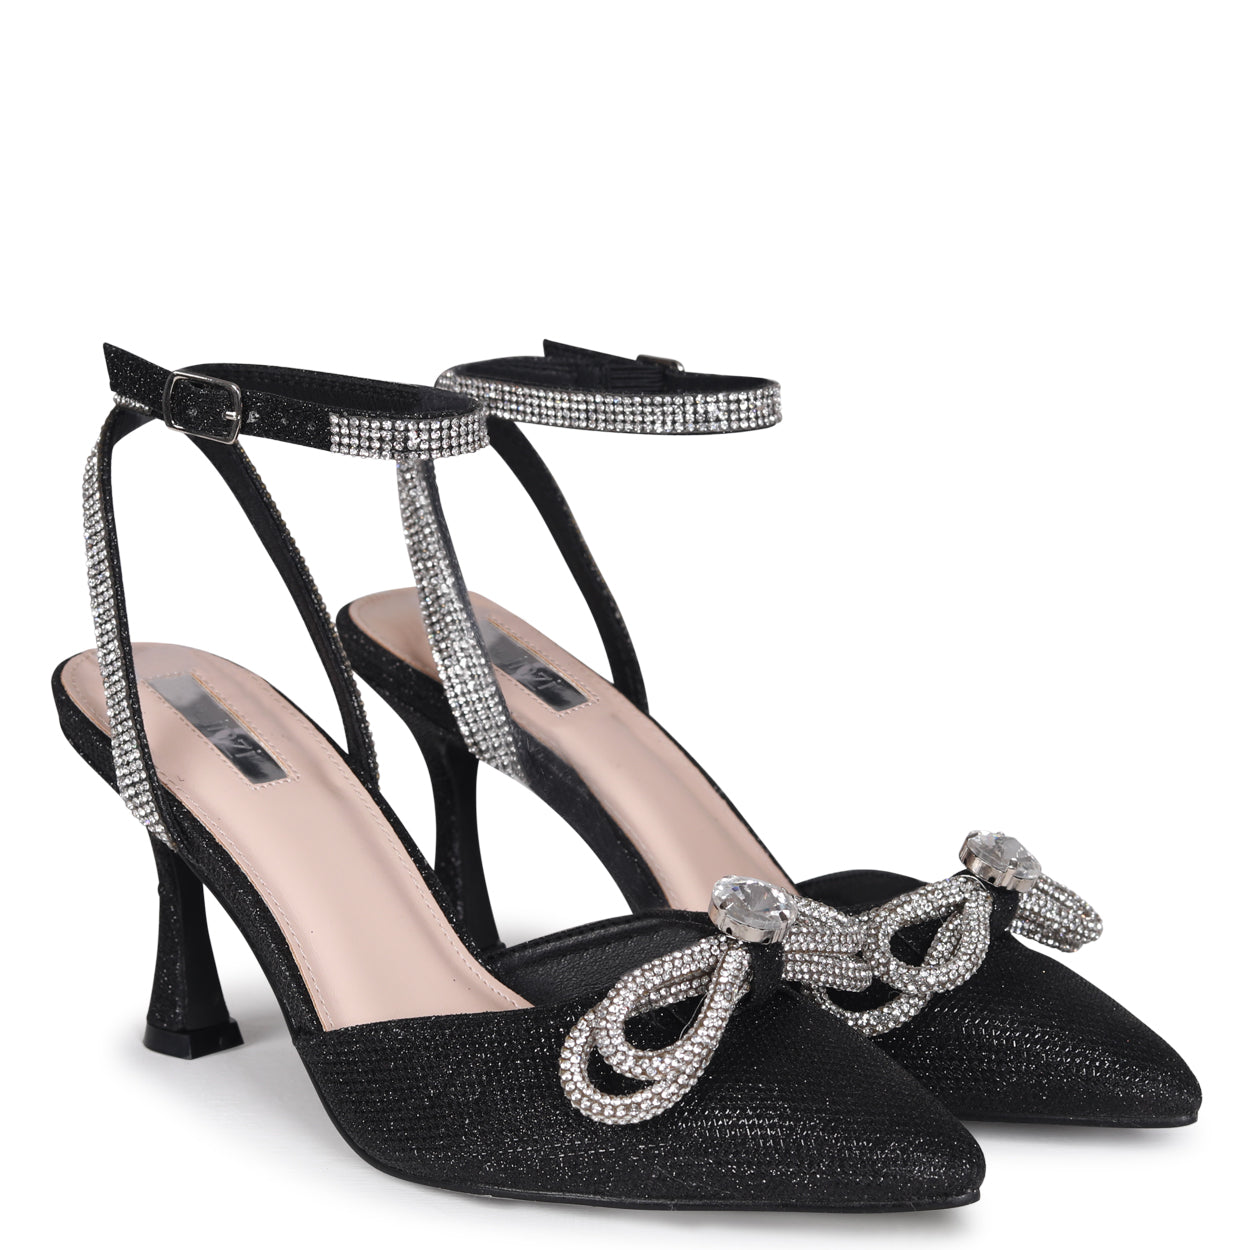 Buy Nightmare Before Christmas Wedding Shoes Black Glitter Heels Beautiful  Bridal Shoe Online in India - Etsy